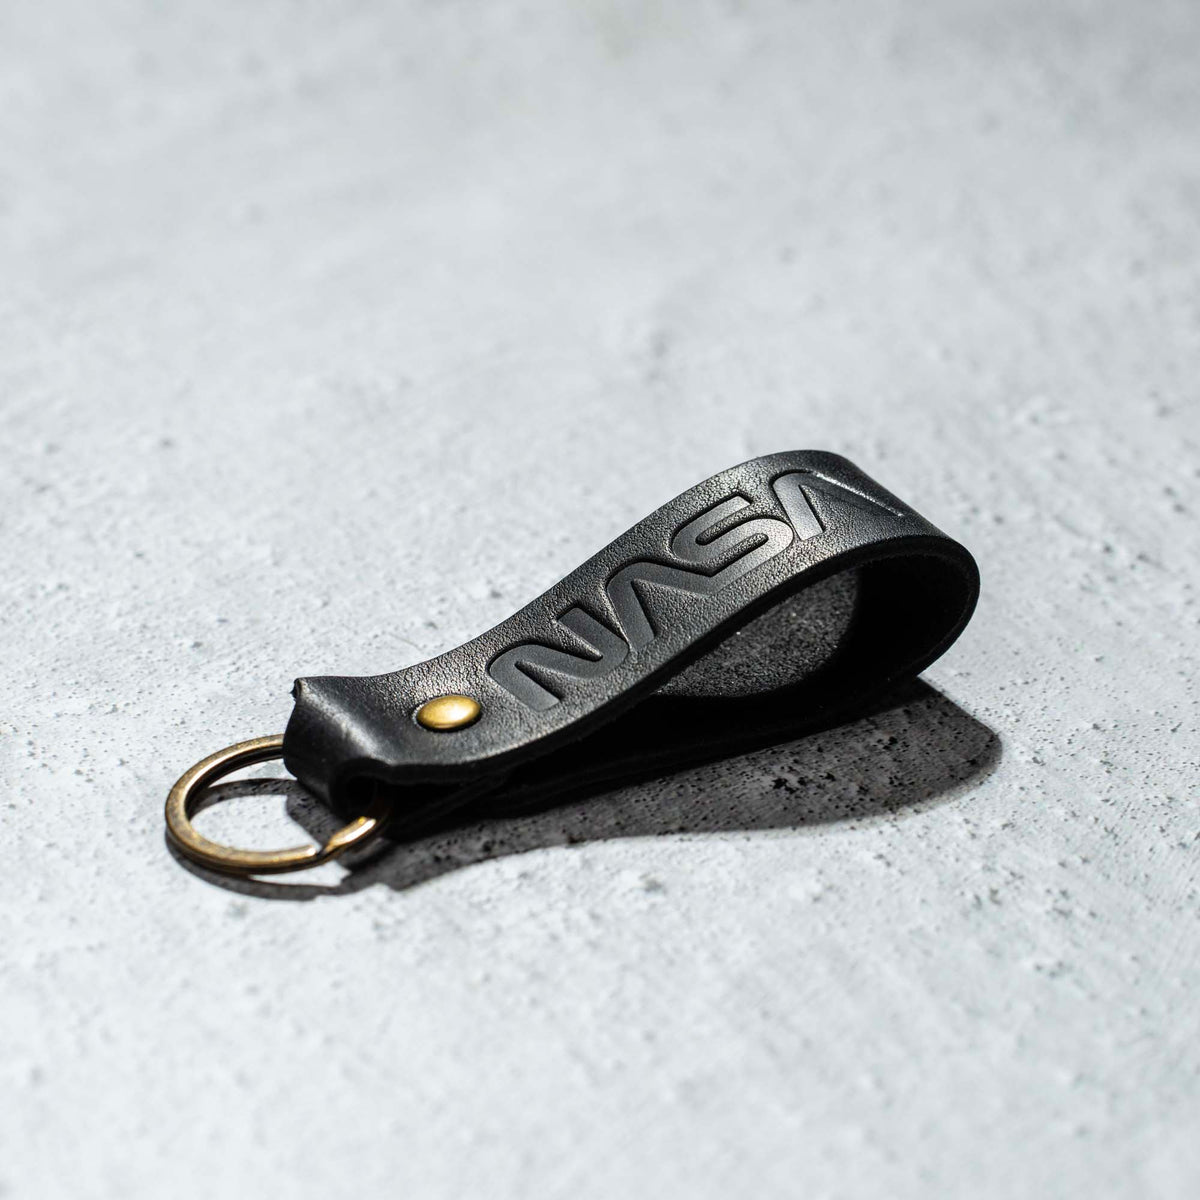 The Nasa Tucker Fine Leather Key Chain Key ring